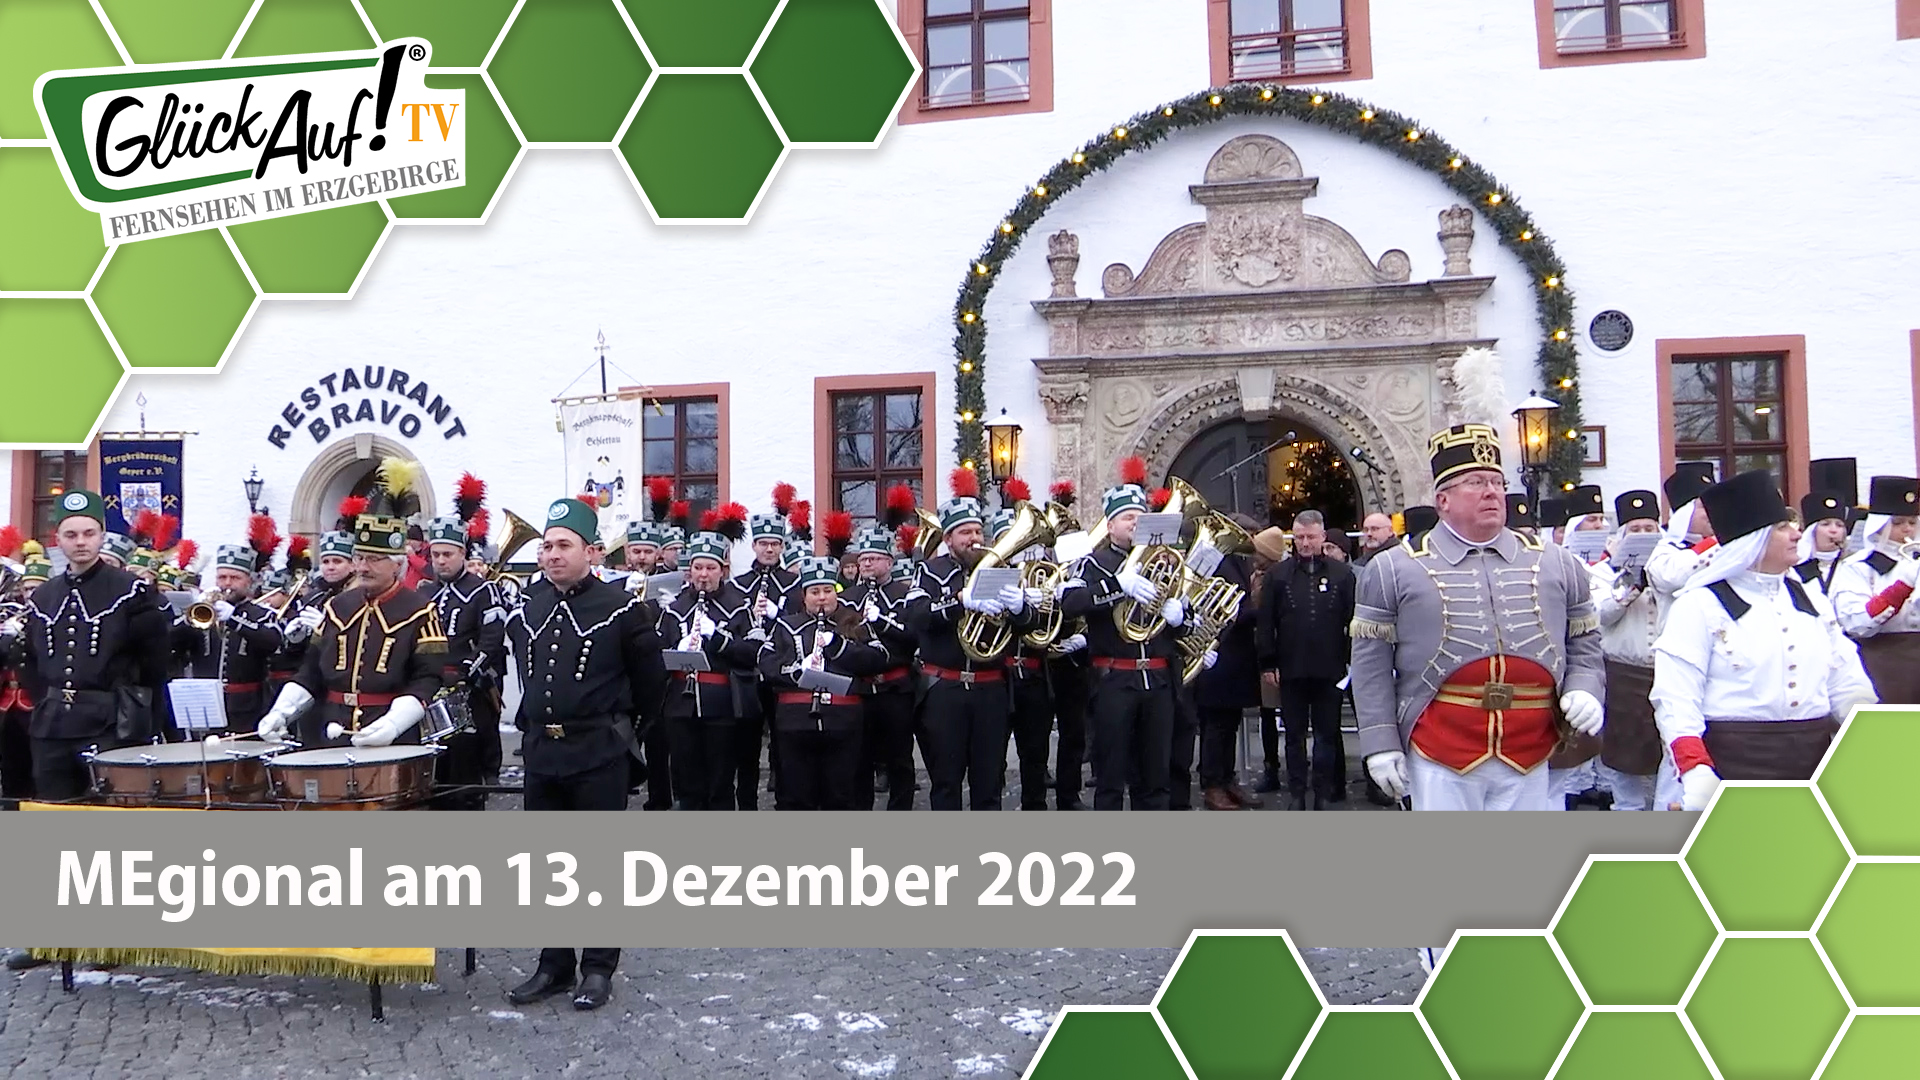 MEgional am 13. Dezember 2022 - mit der Bergparade am 3. Advent in Marienberg